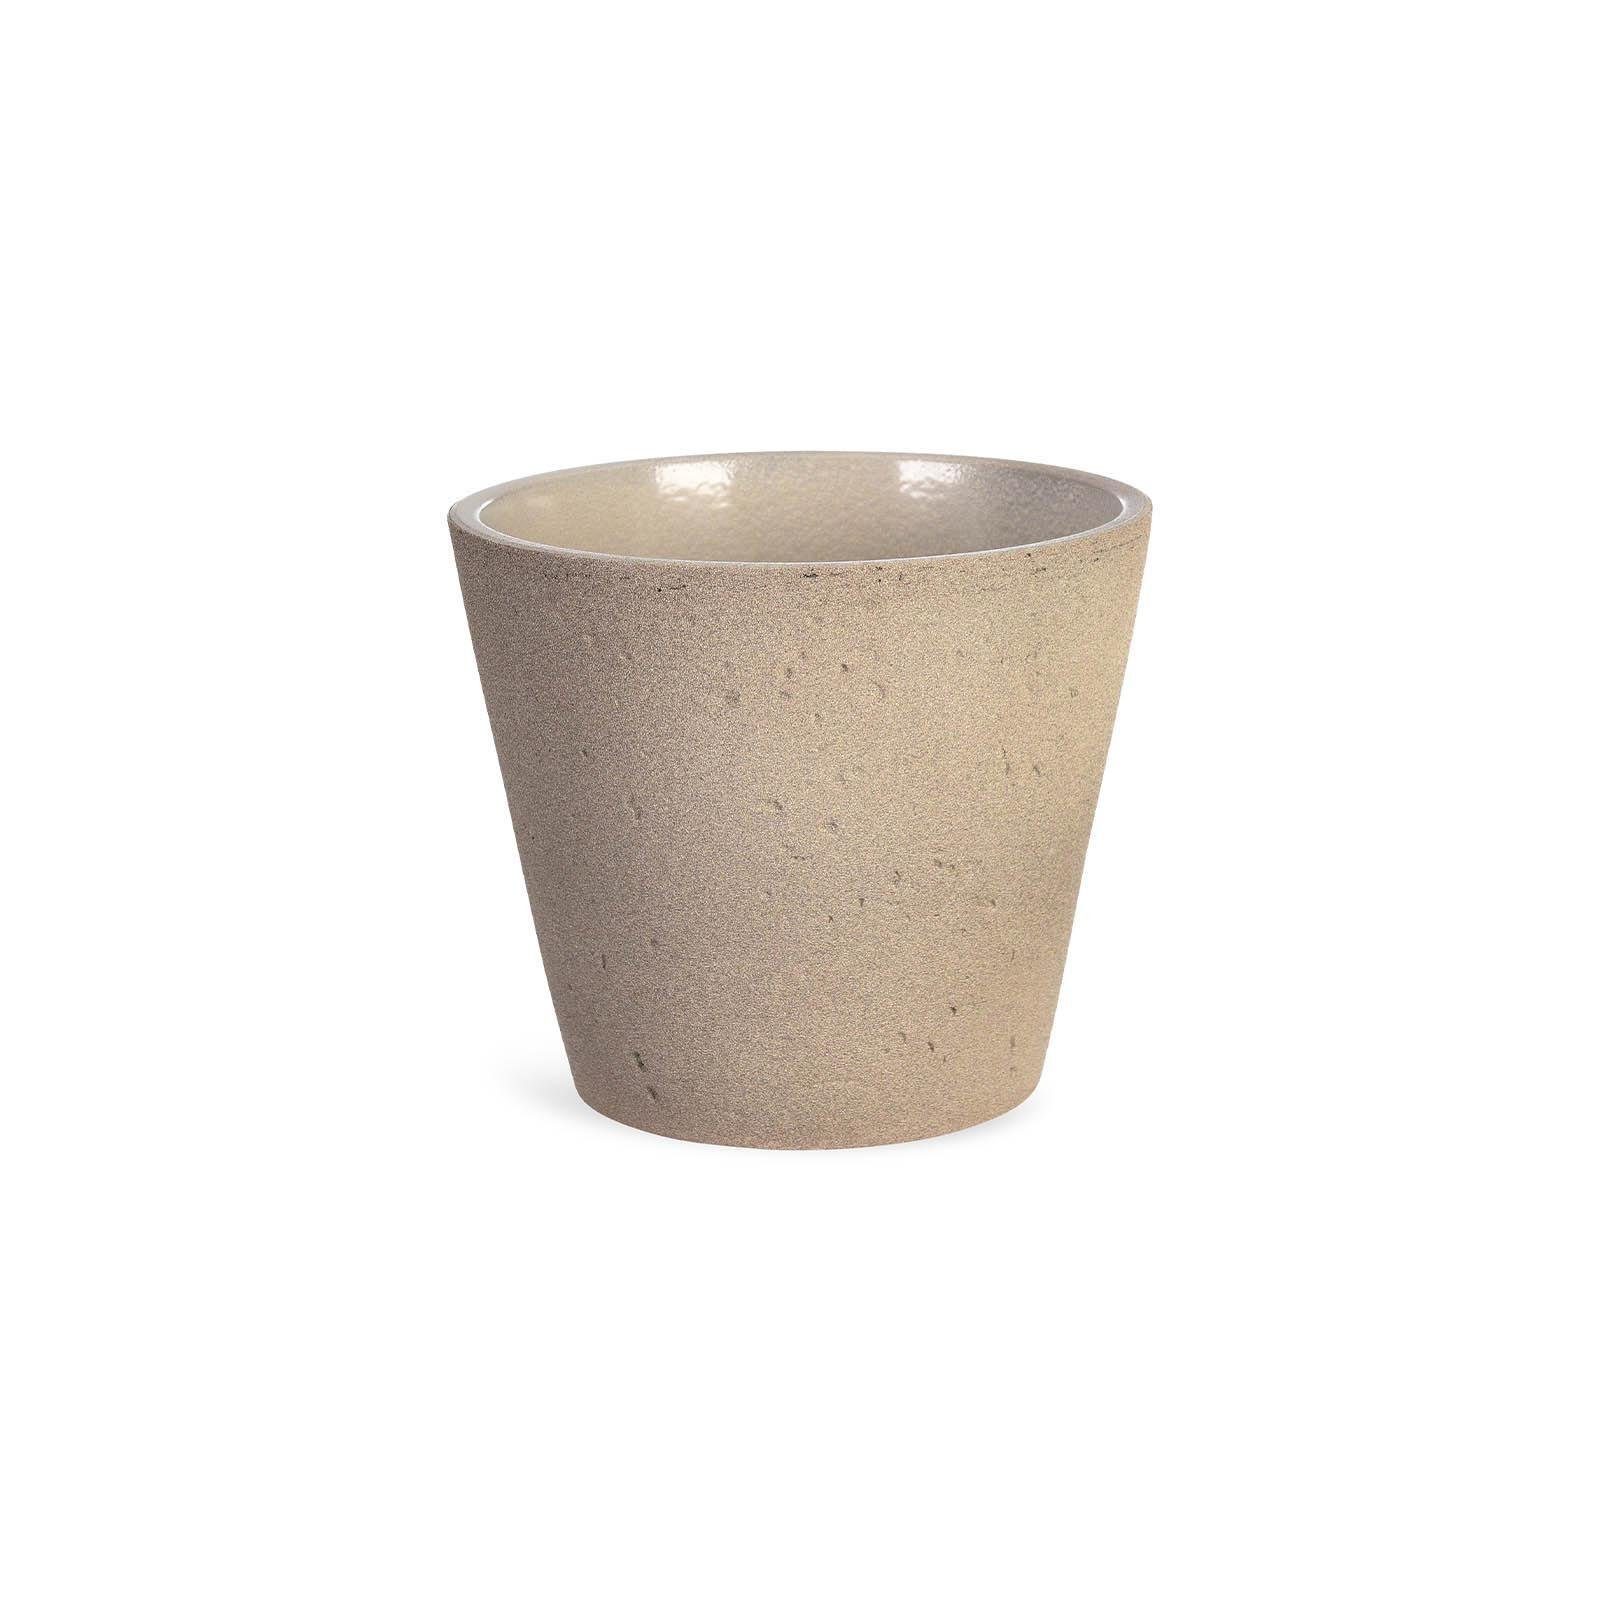 Depot Übertopf »Blumentopf Roca« (Packung, 1 Stück Blumentopf), aus  Keramik, Ø 13 Zentimeter, H 11.2 Zentimeter online kaufen | OTTO